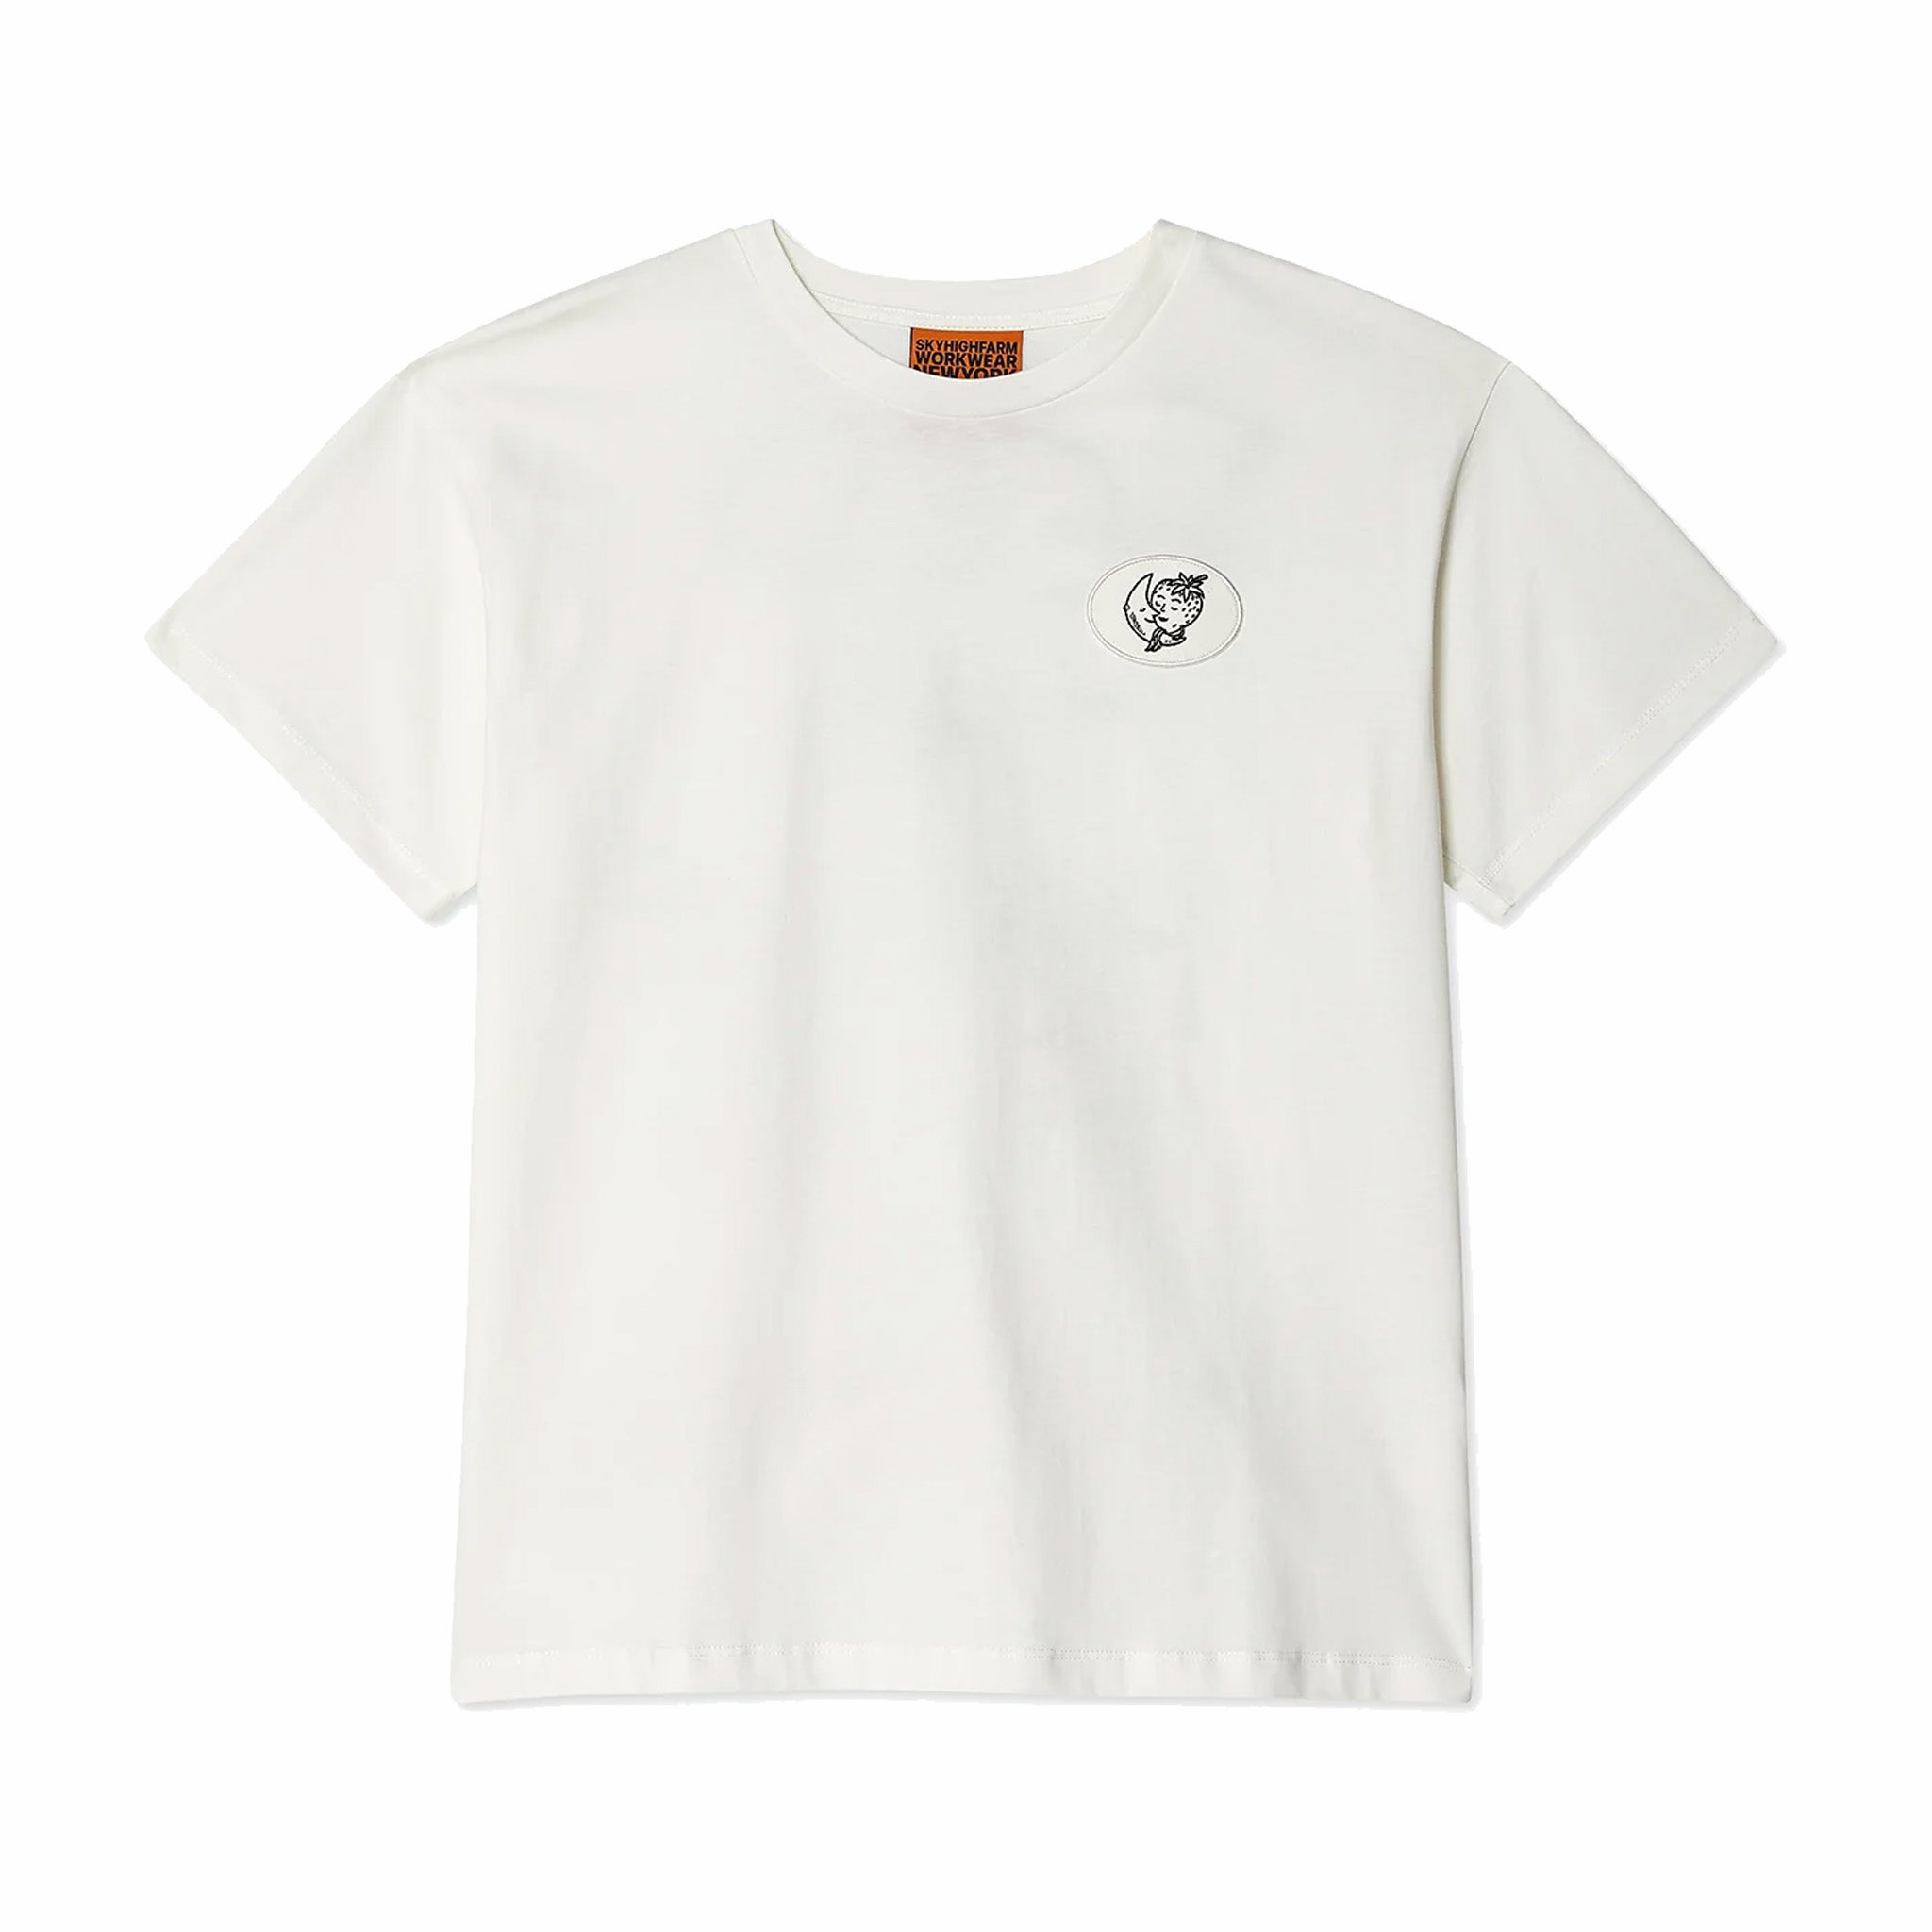 Sky High Farm Workwear Alastair McKimm Workwear T-Shirt (White) - August Shop